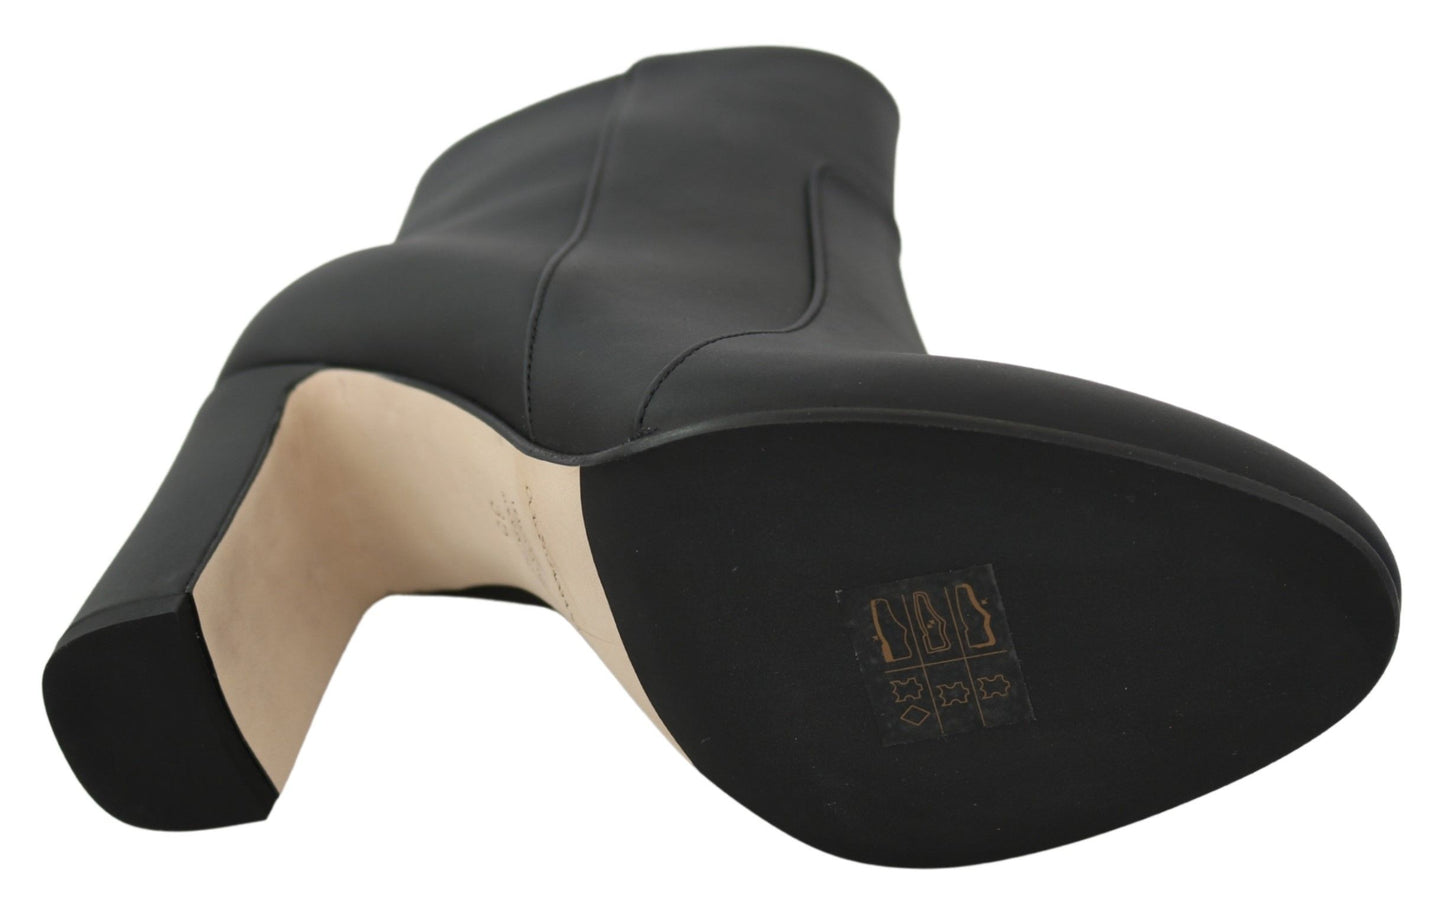 Elegant Black Leather High Heel Boots